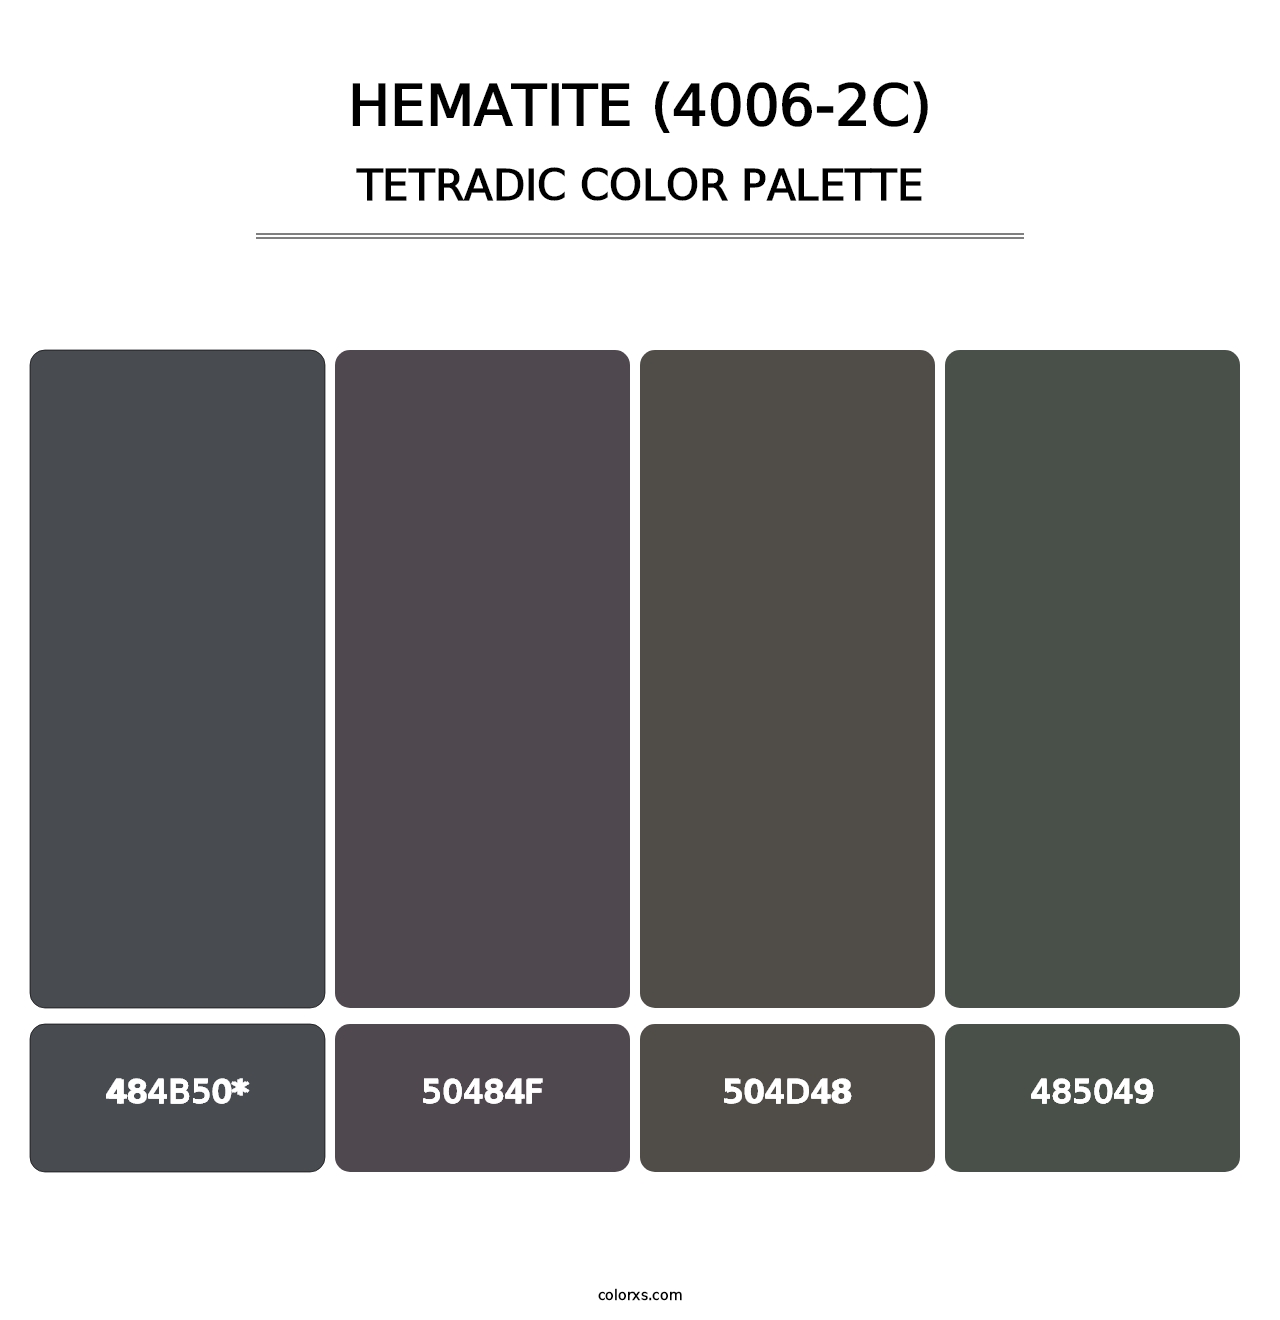 Hematite (4006-2C) - Tetradic Color Palette